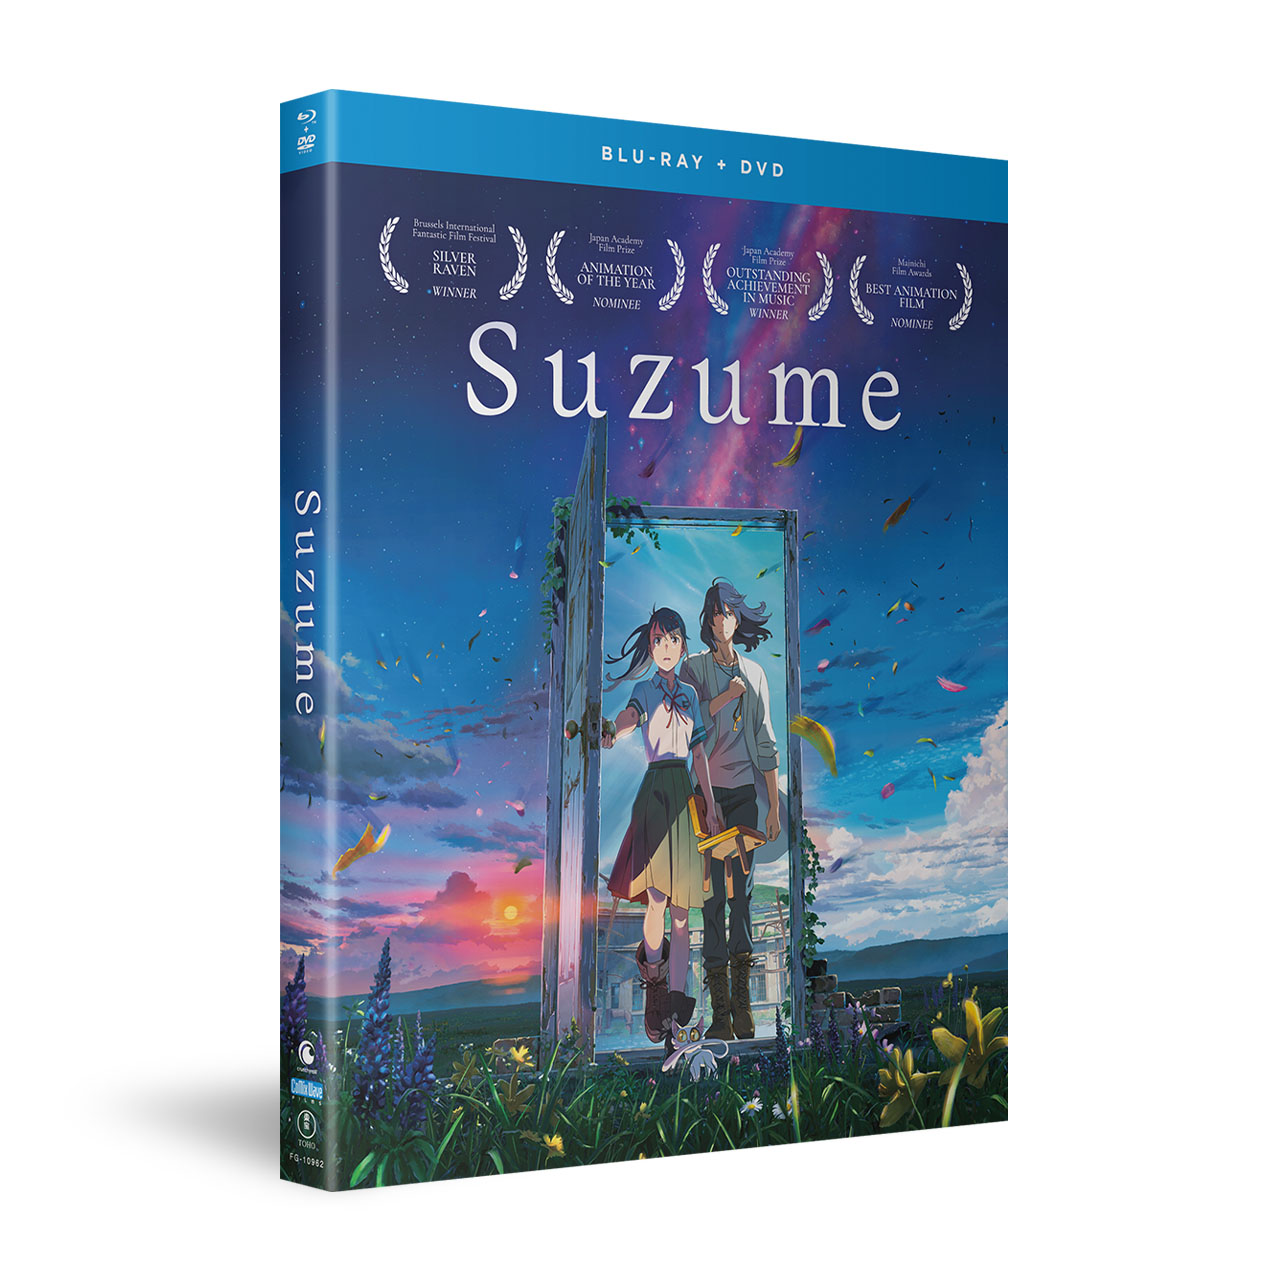 Suzume - Movie - Blu-ray + DVD image count 2